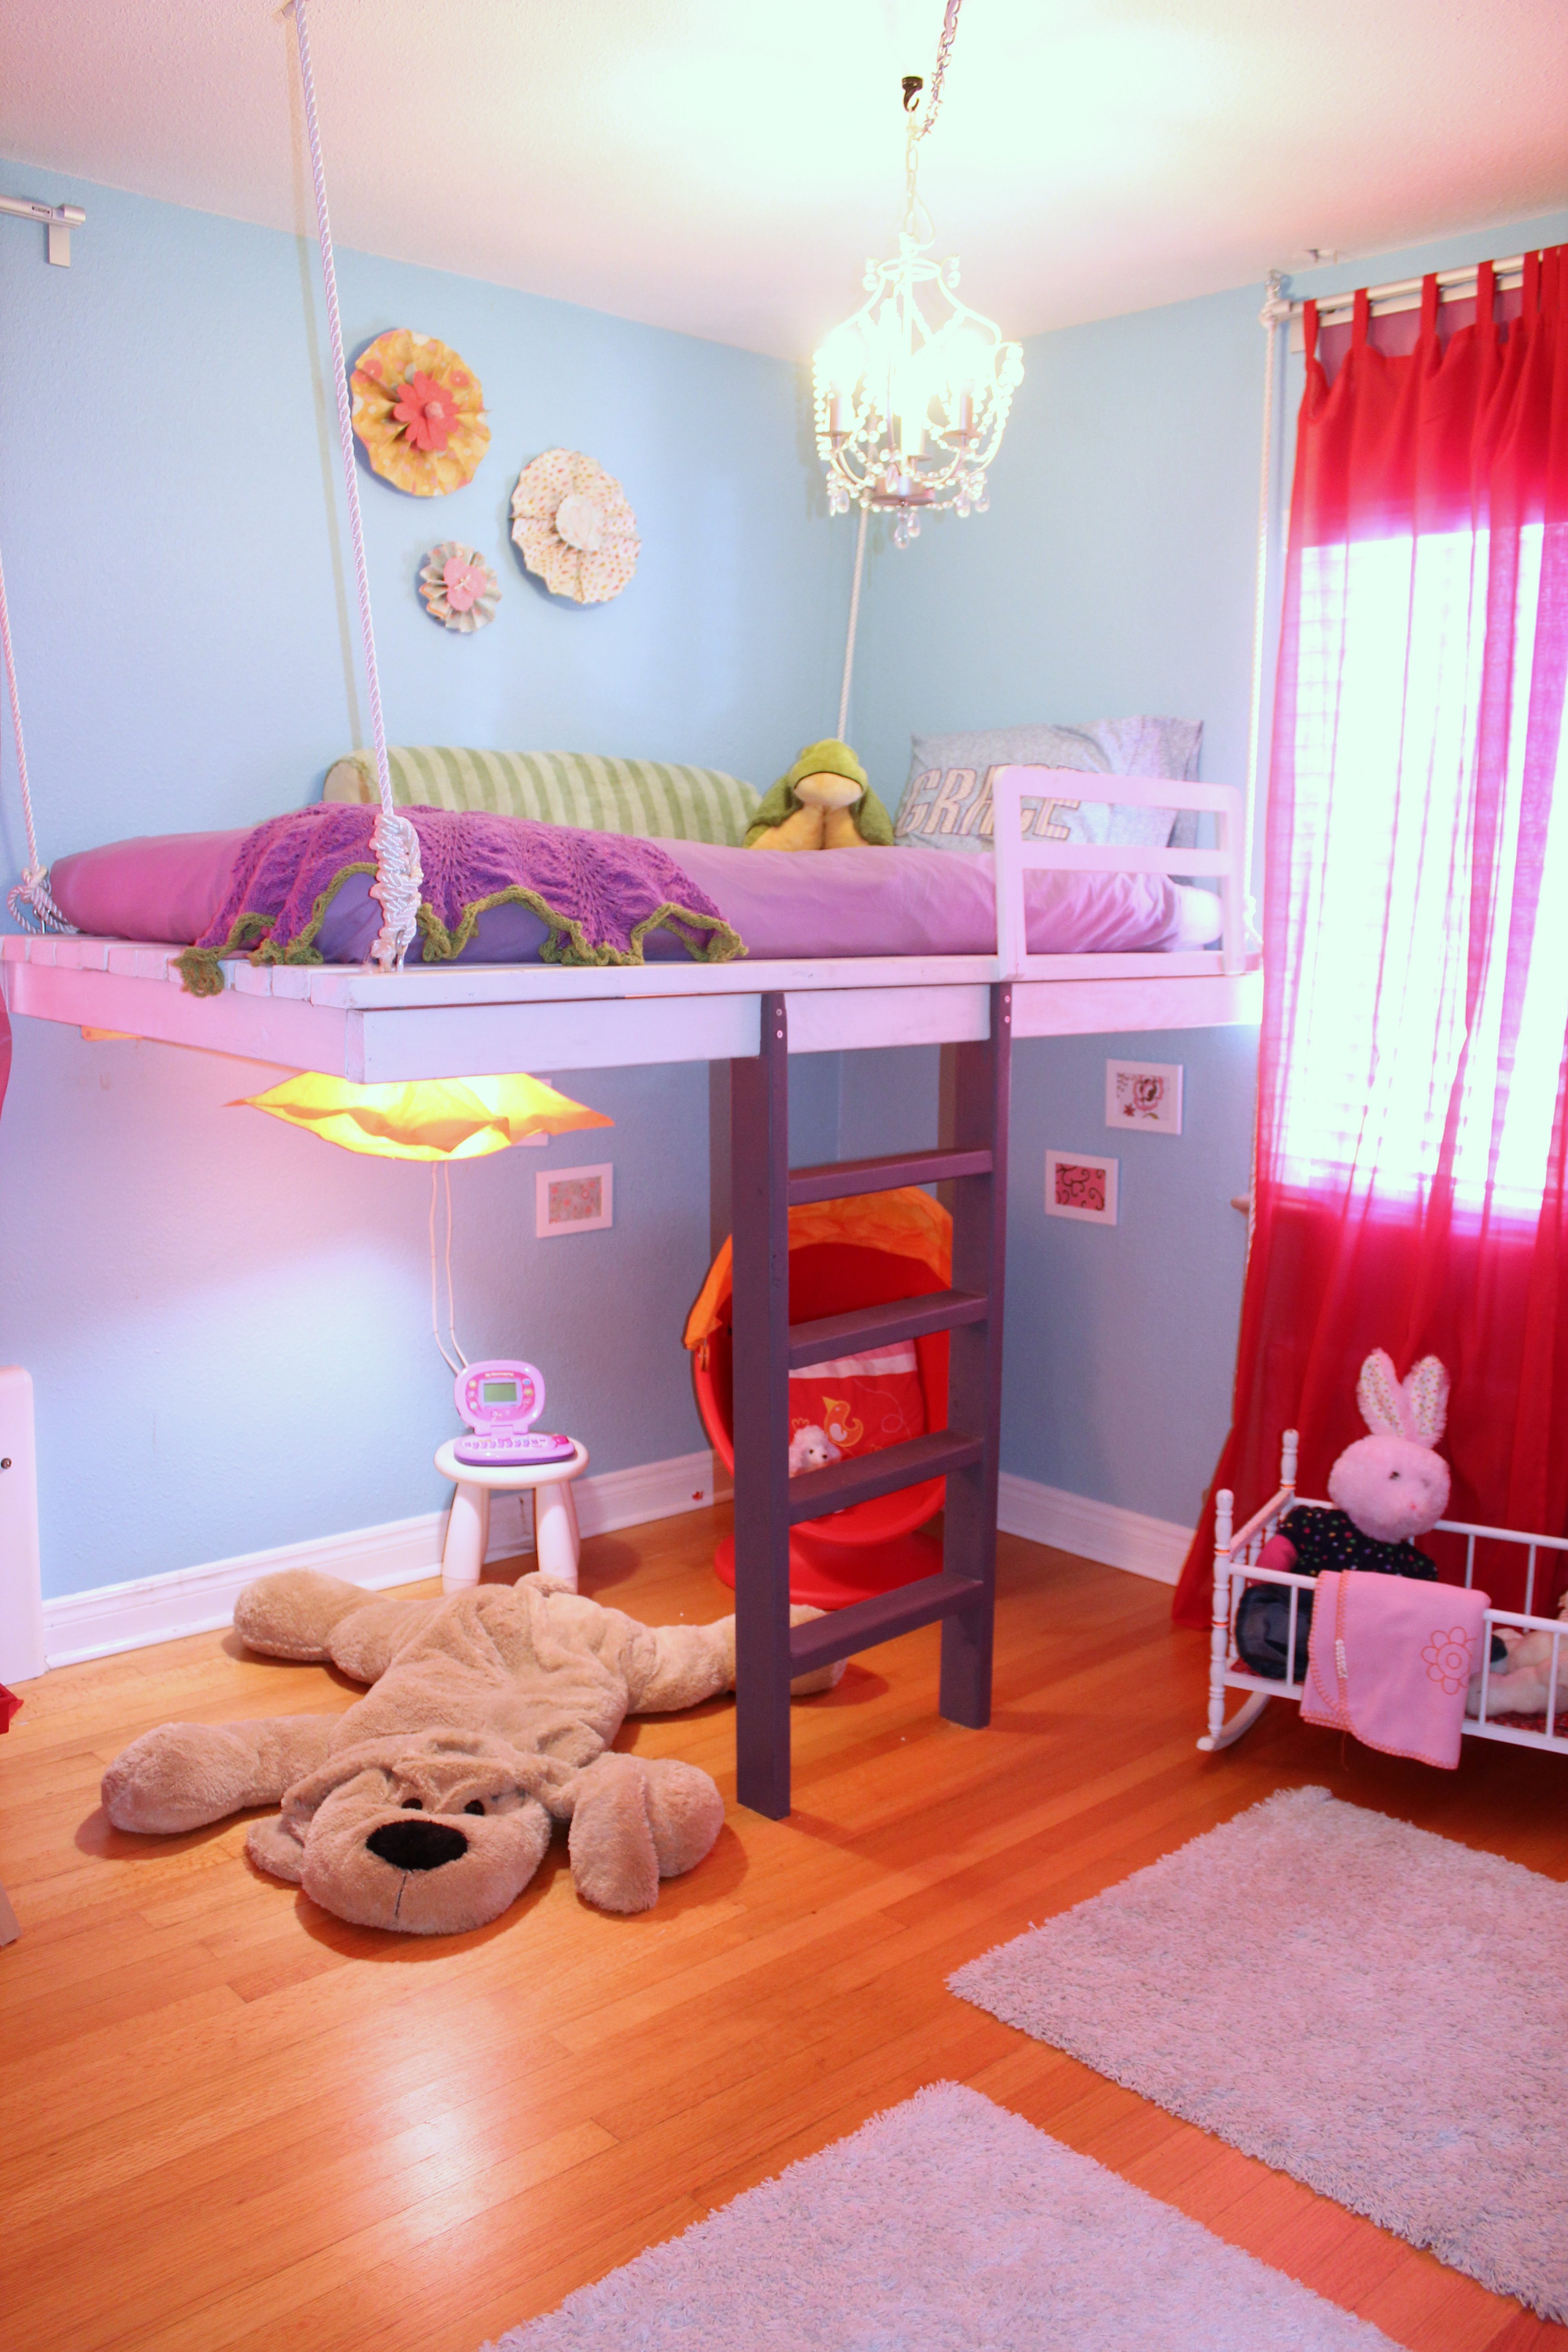 loft bed diy build ana daughters win heart hanging bedroom beds plans rooms cute built floating fun idea floor cool